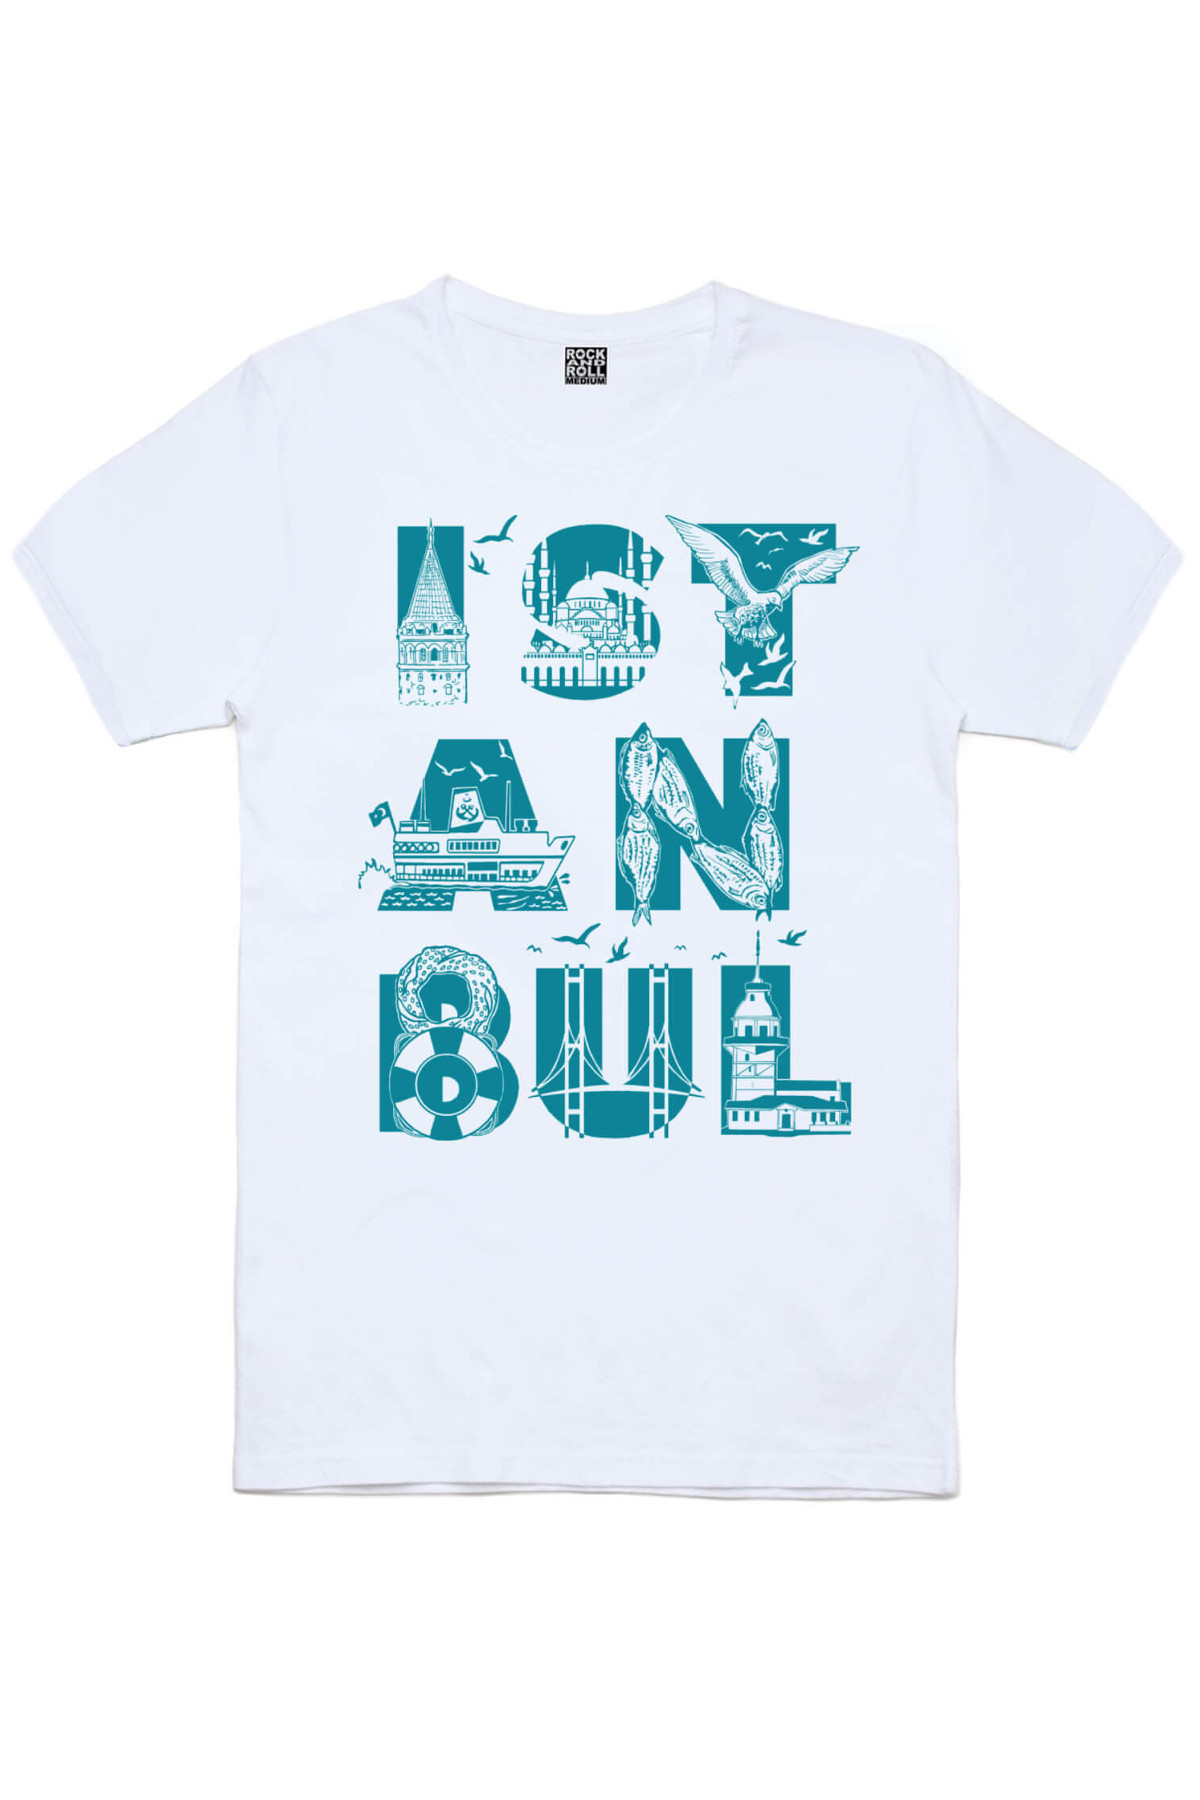 İstanbul Harfler Beyaz Kısa Kollu Erkek T-shirt